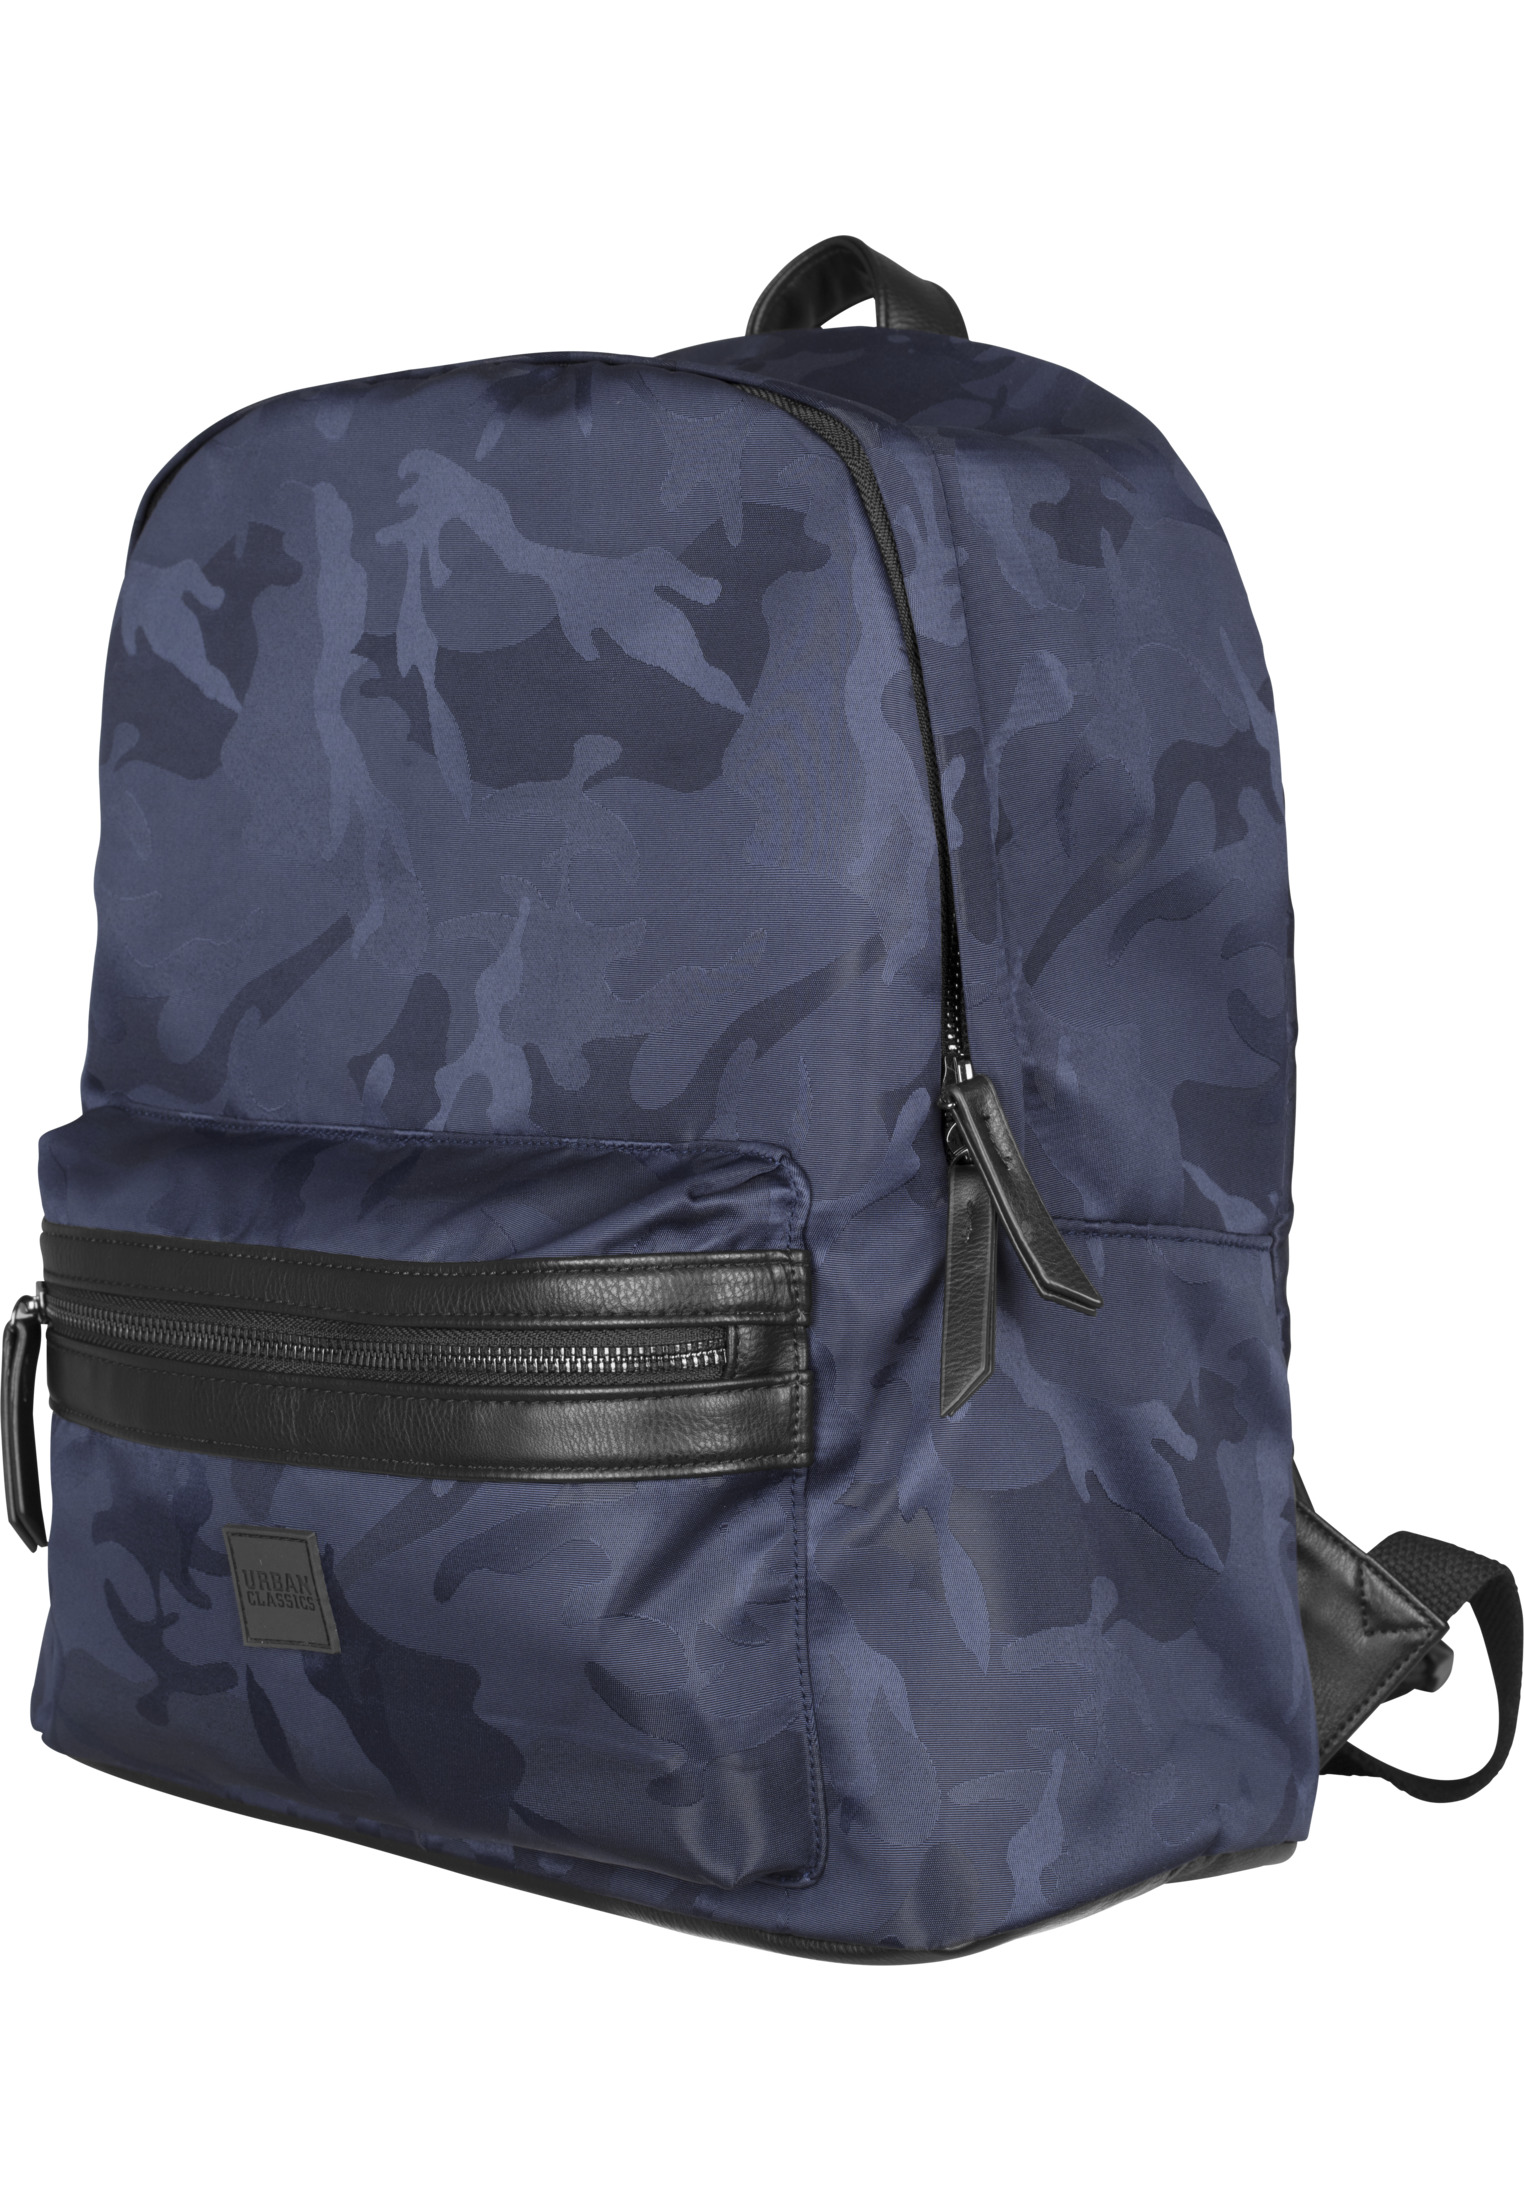 Taschen Camo Jacquard Backpack in Farbe navy camo